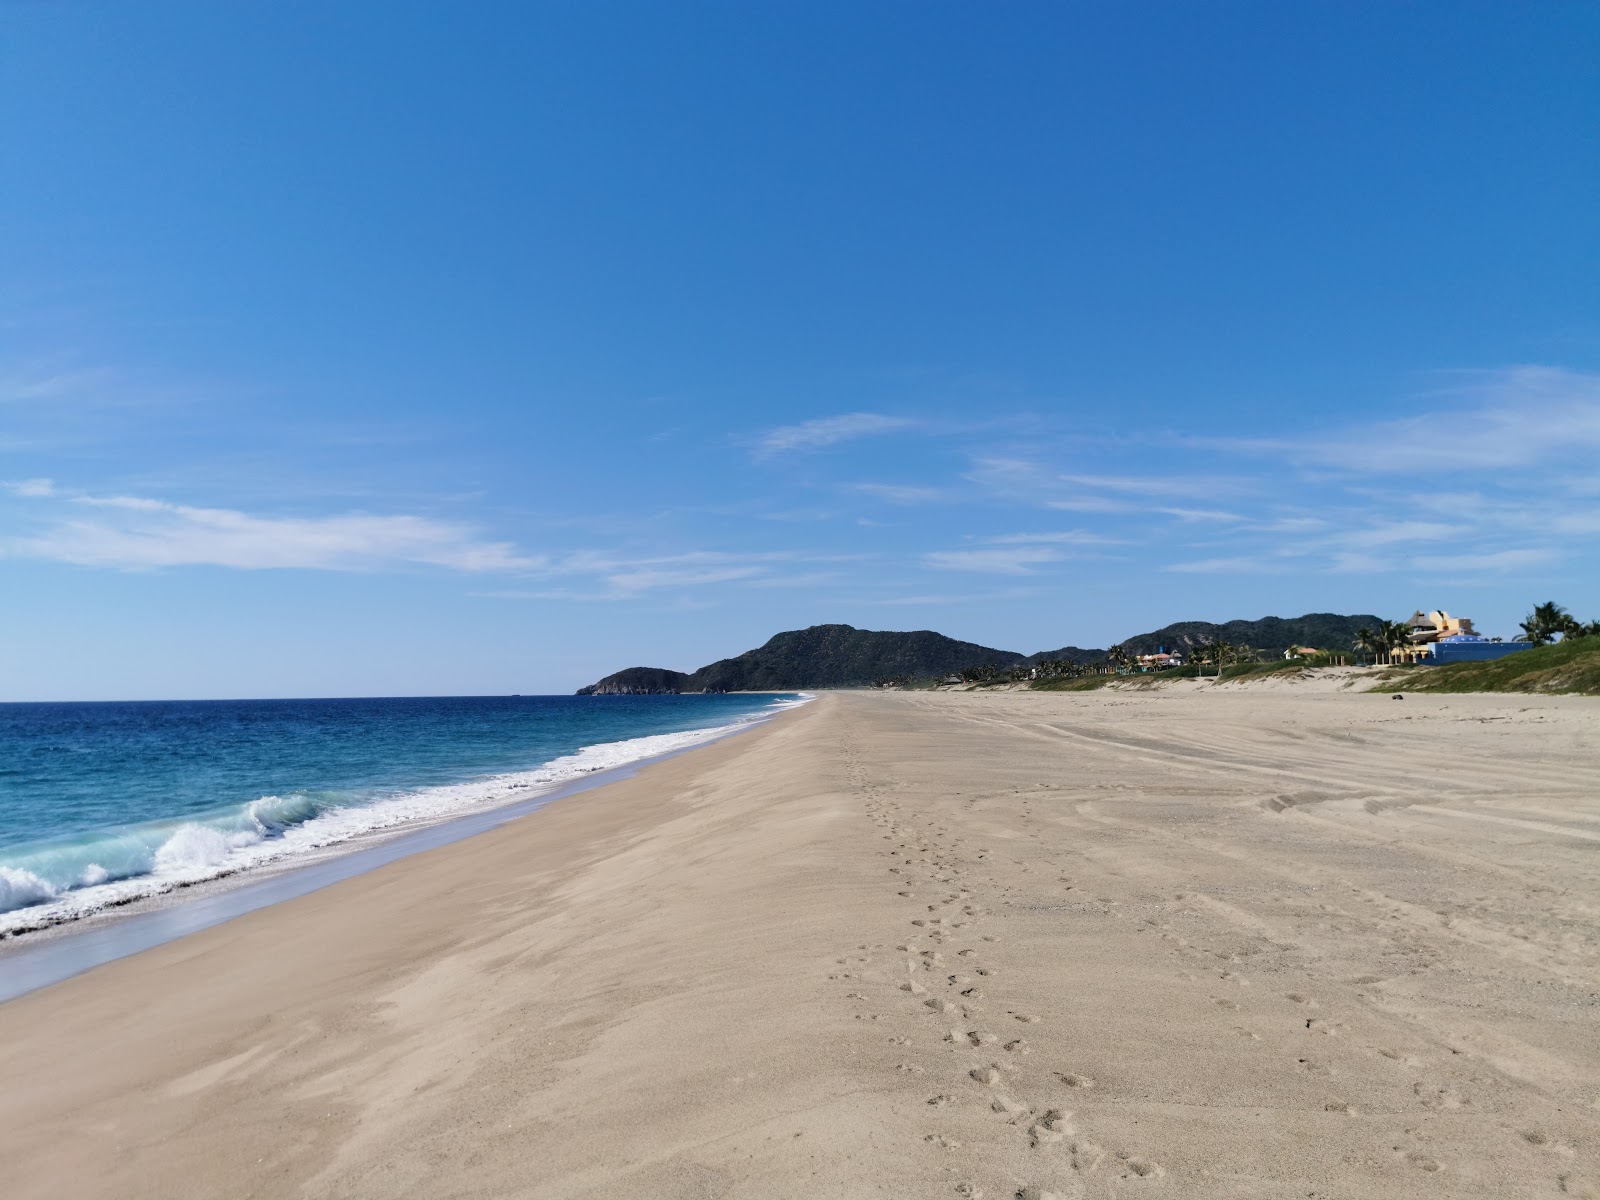 Fotografie cu Playa el Coco II cu o suprafață de nisip maro fin